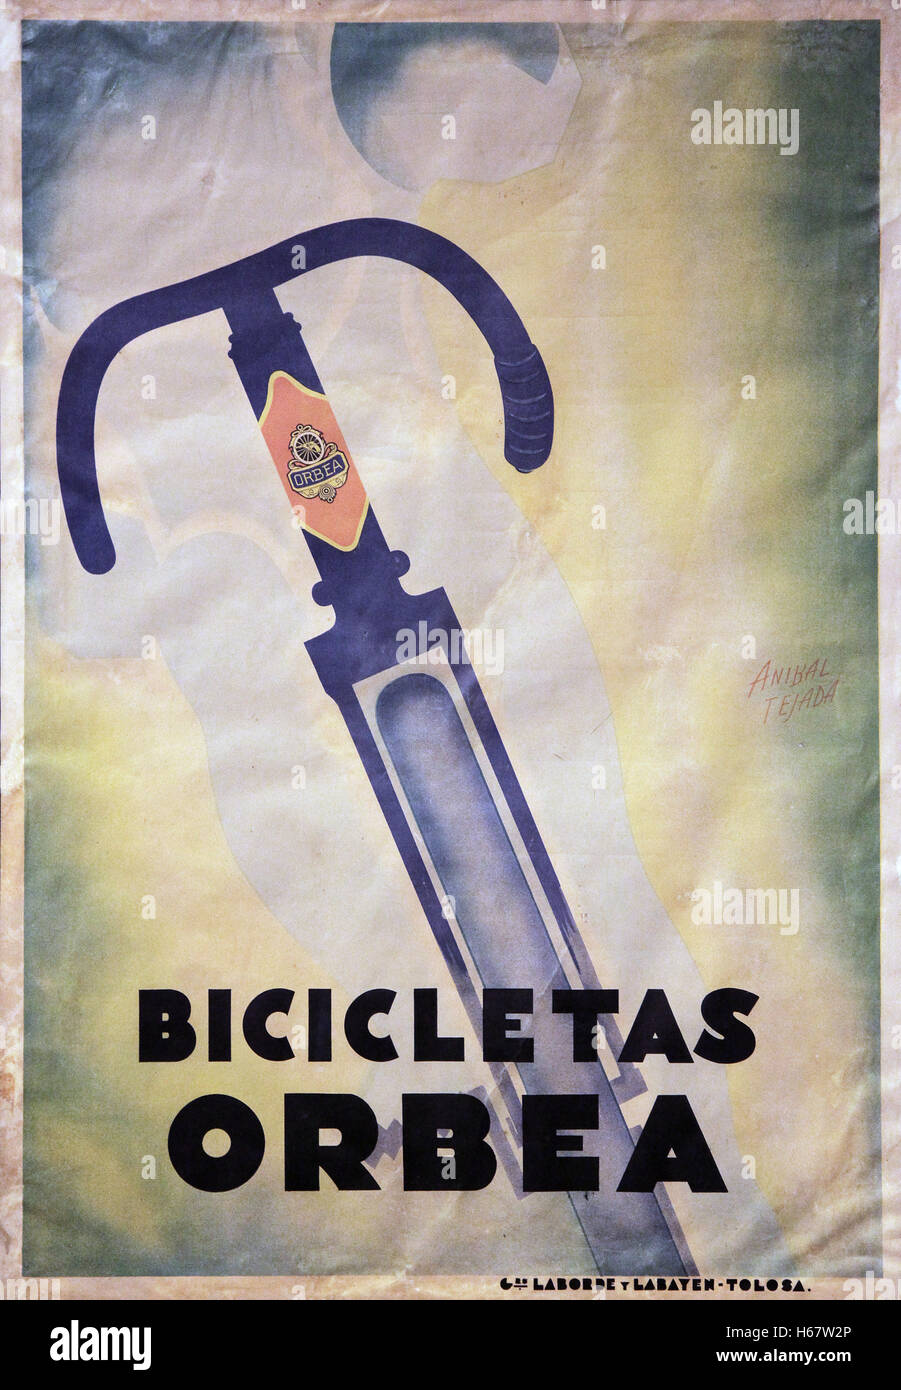 Bicicletas Orbea.A Spanish Vintage bicycle poster Stock Photo